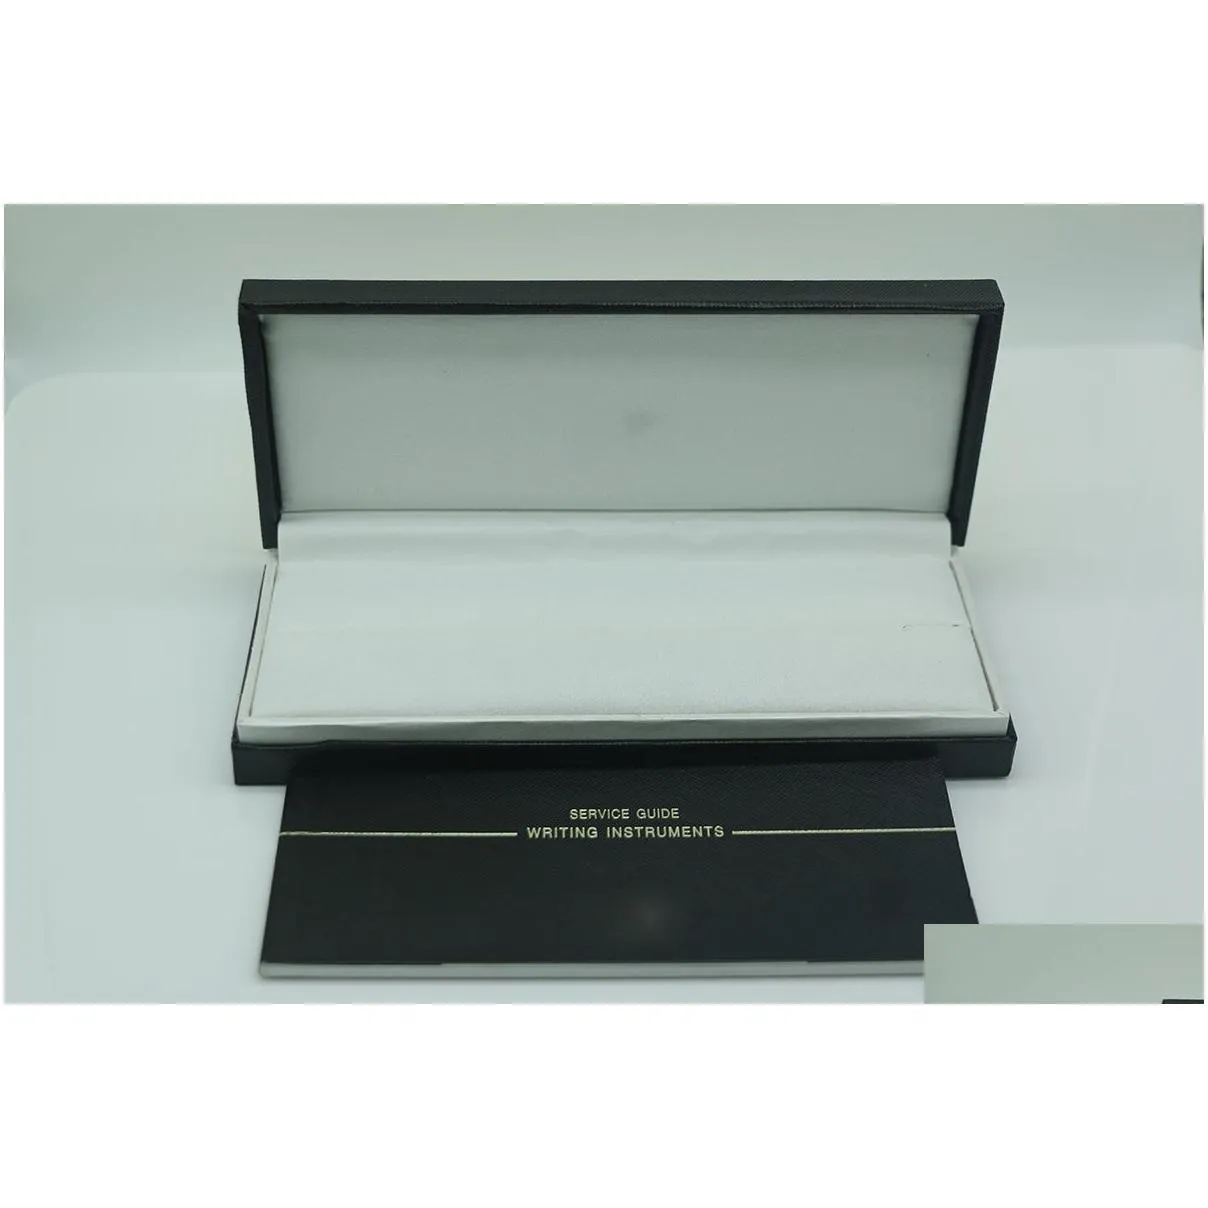 wholesale Black Wood frame Pen Box For Fountain Pen/Ballpoint Pen/Roller Ball Pens Pencil Case with The Warranty Manual